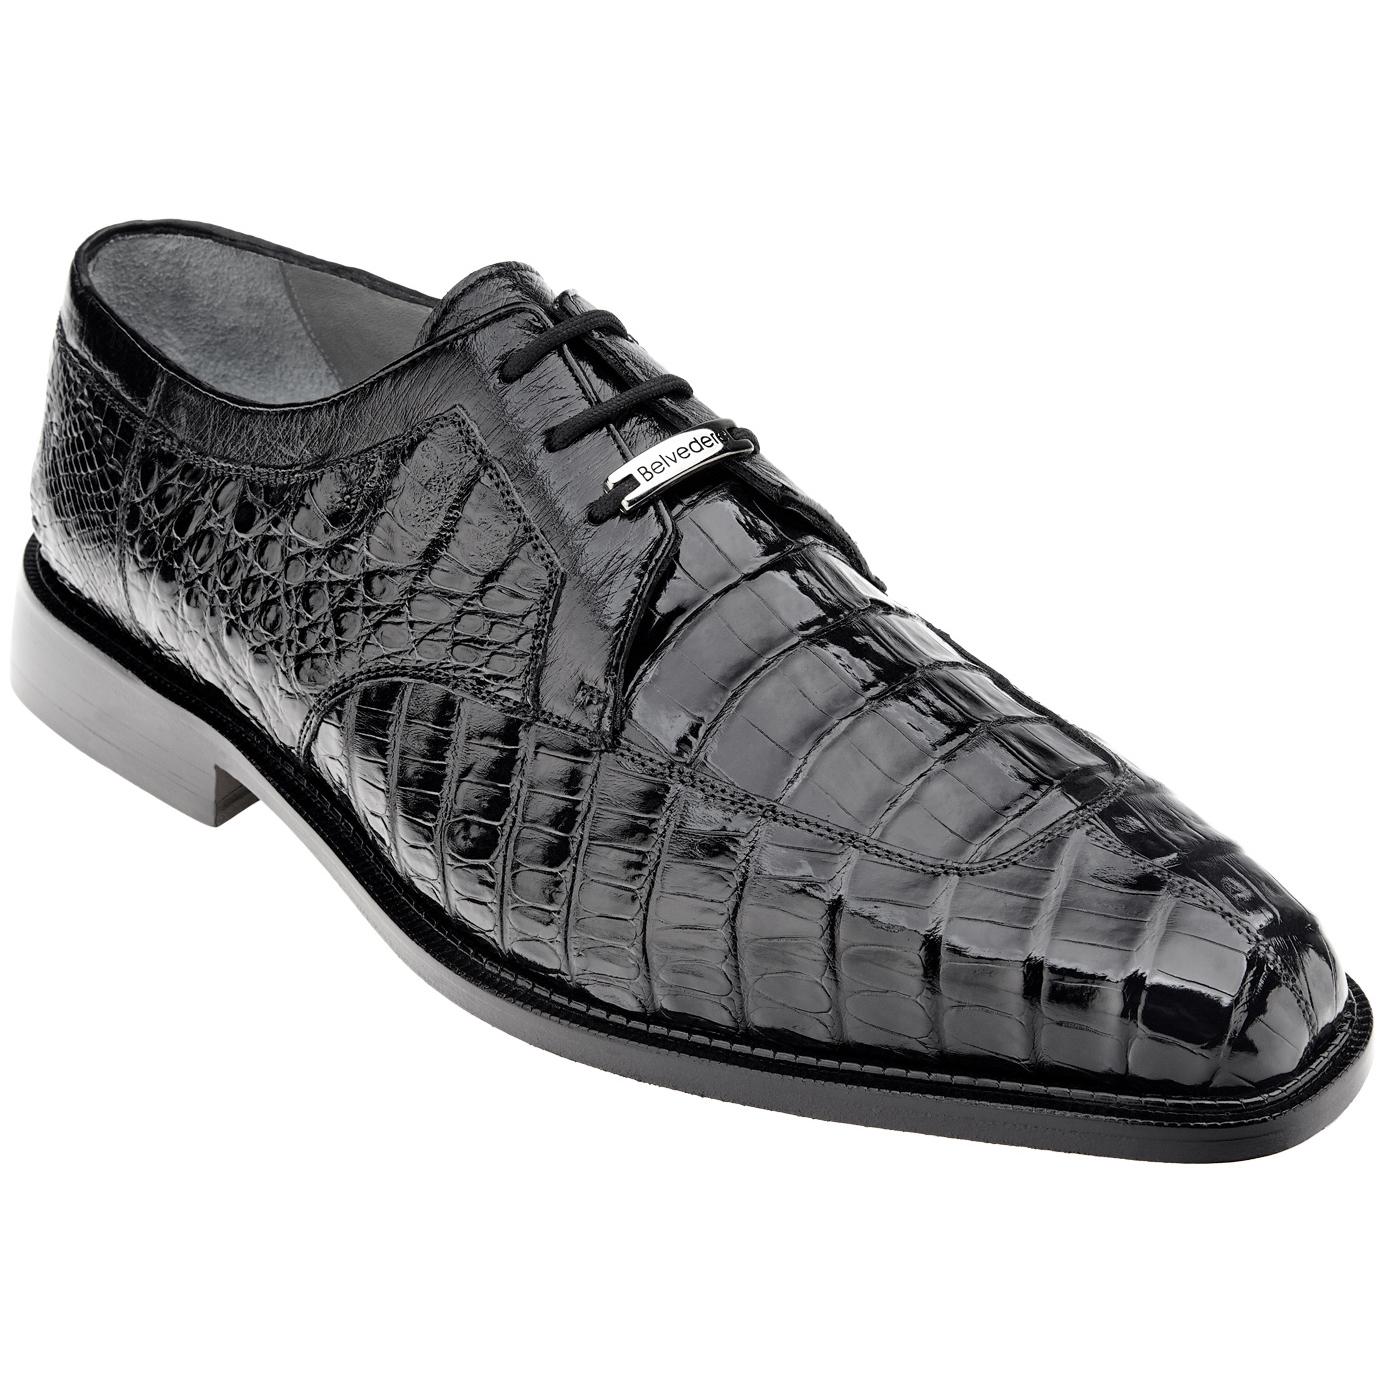  Belvedere  Susa Crocodile  Shoes  Black Upscale Menswear